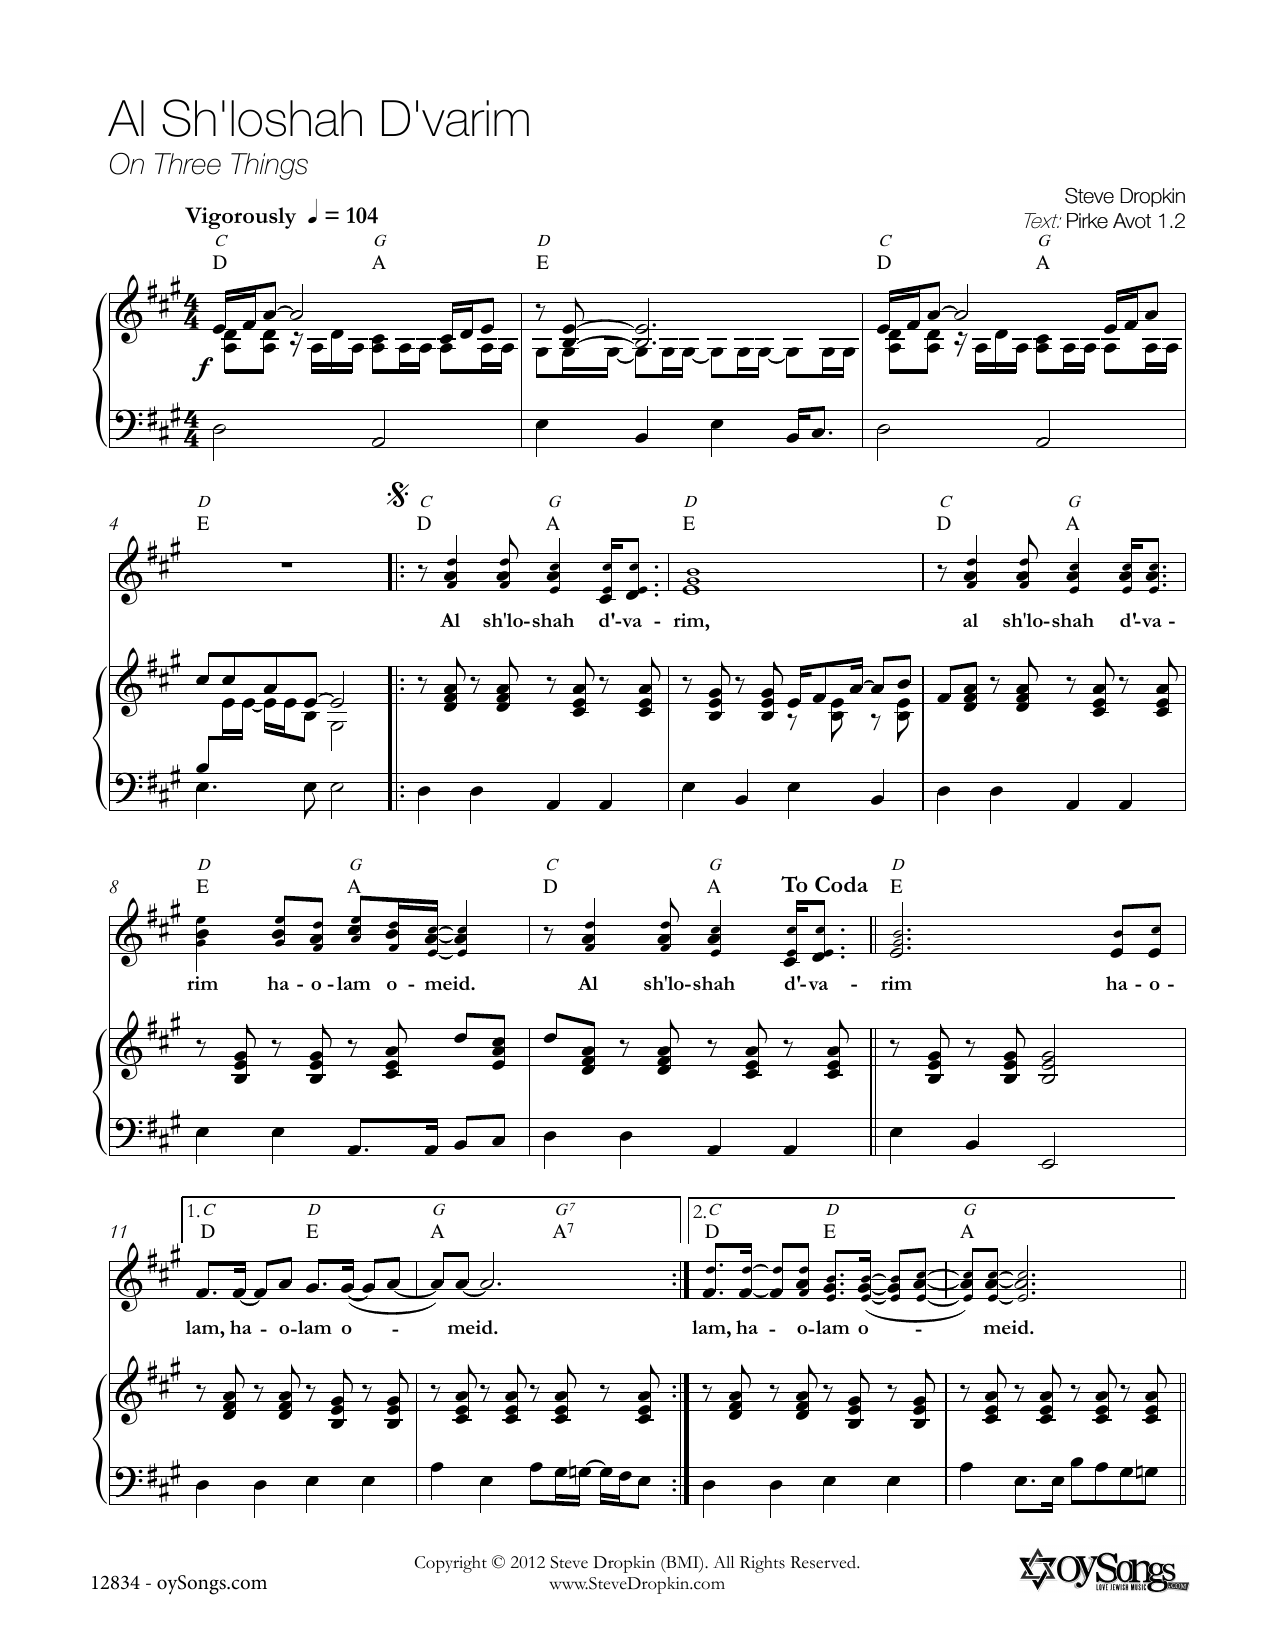 Steve Dropkin Al Shloshah Sheet Music Notes & Chords for Piano, Vocal & Guitar (Right-Hand Melody) - Download or Print PDF